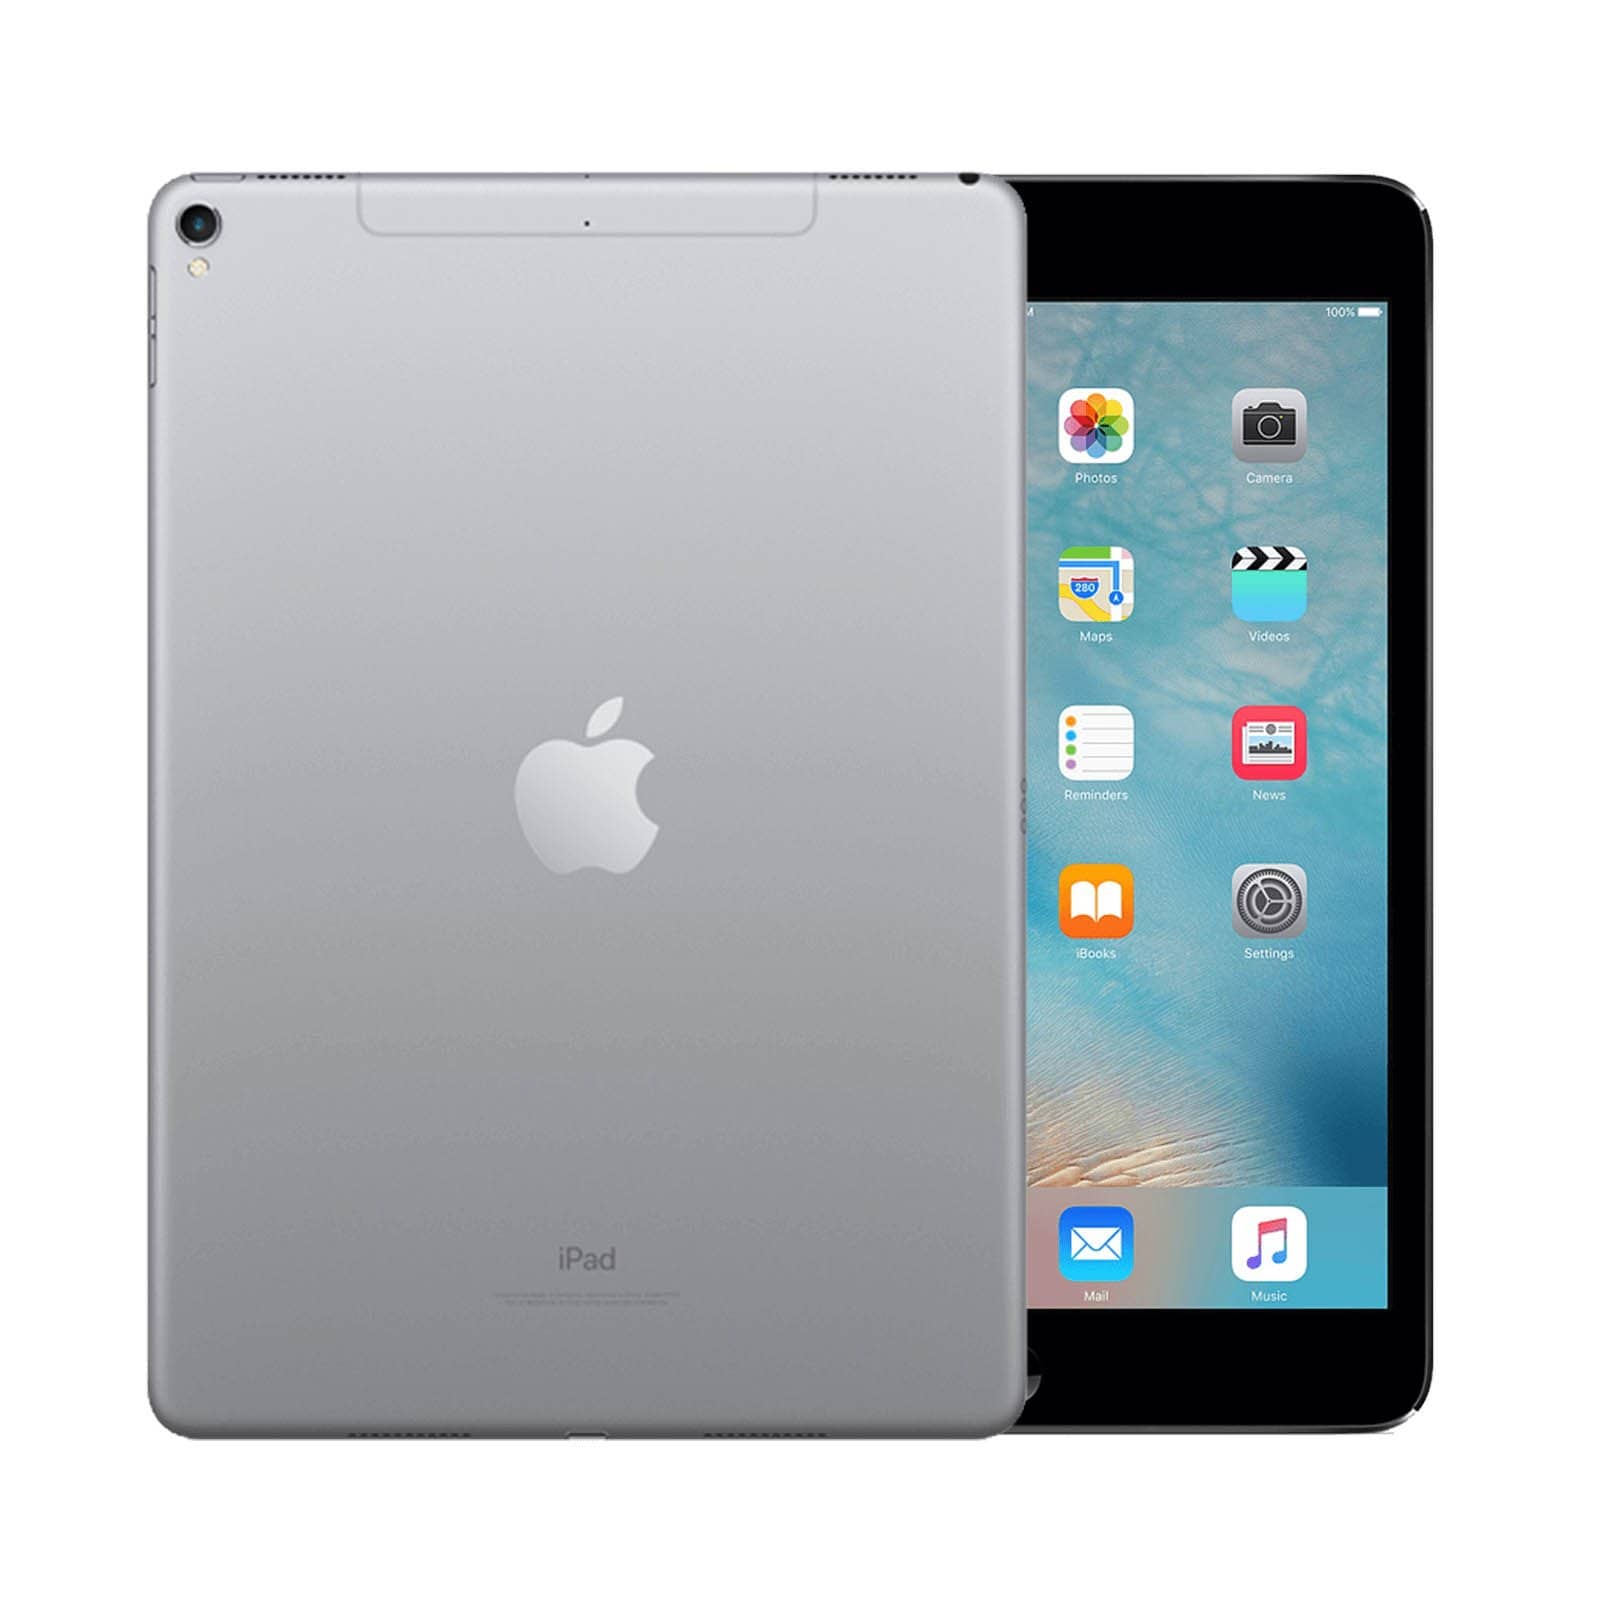 iPad Pro 9.7 Inch 128GB Space Grey Pristine - Unlocked 128GB Space Grey Pristine